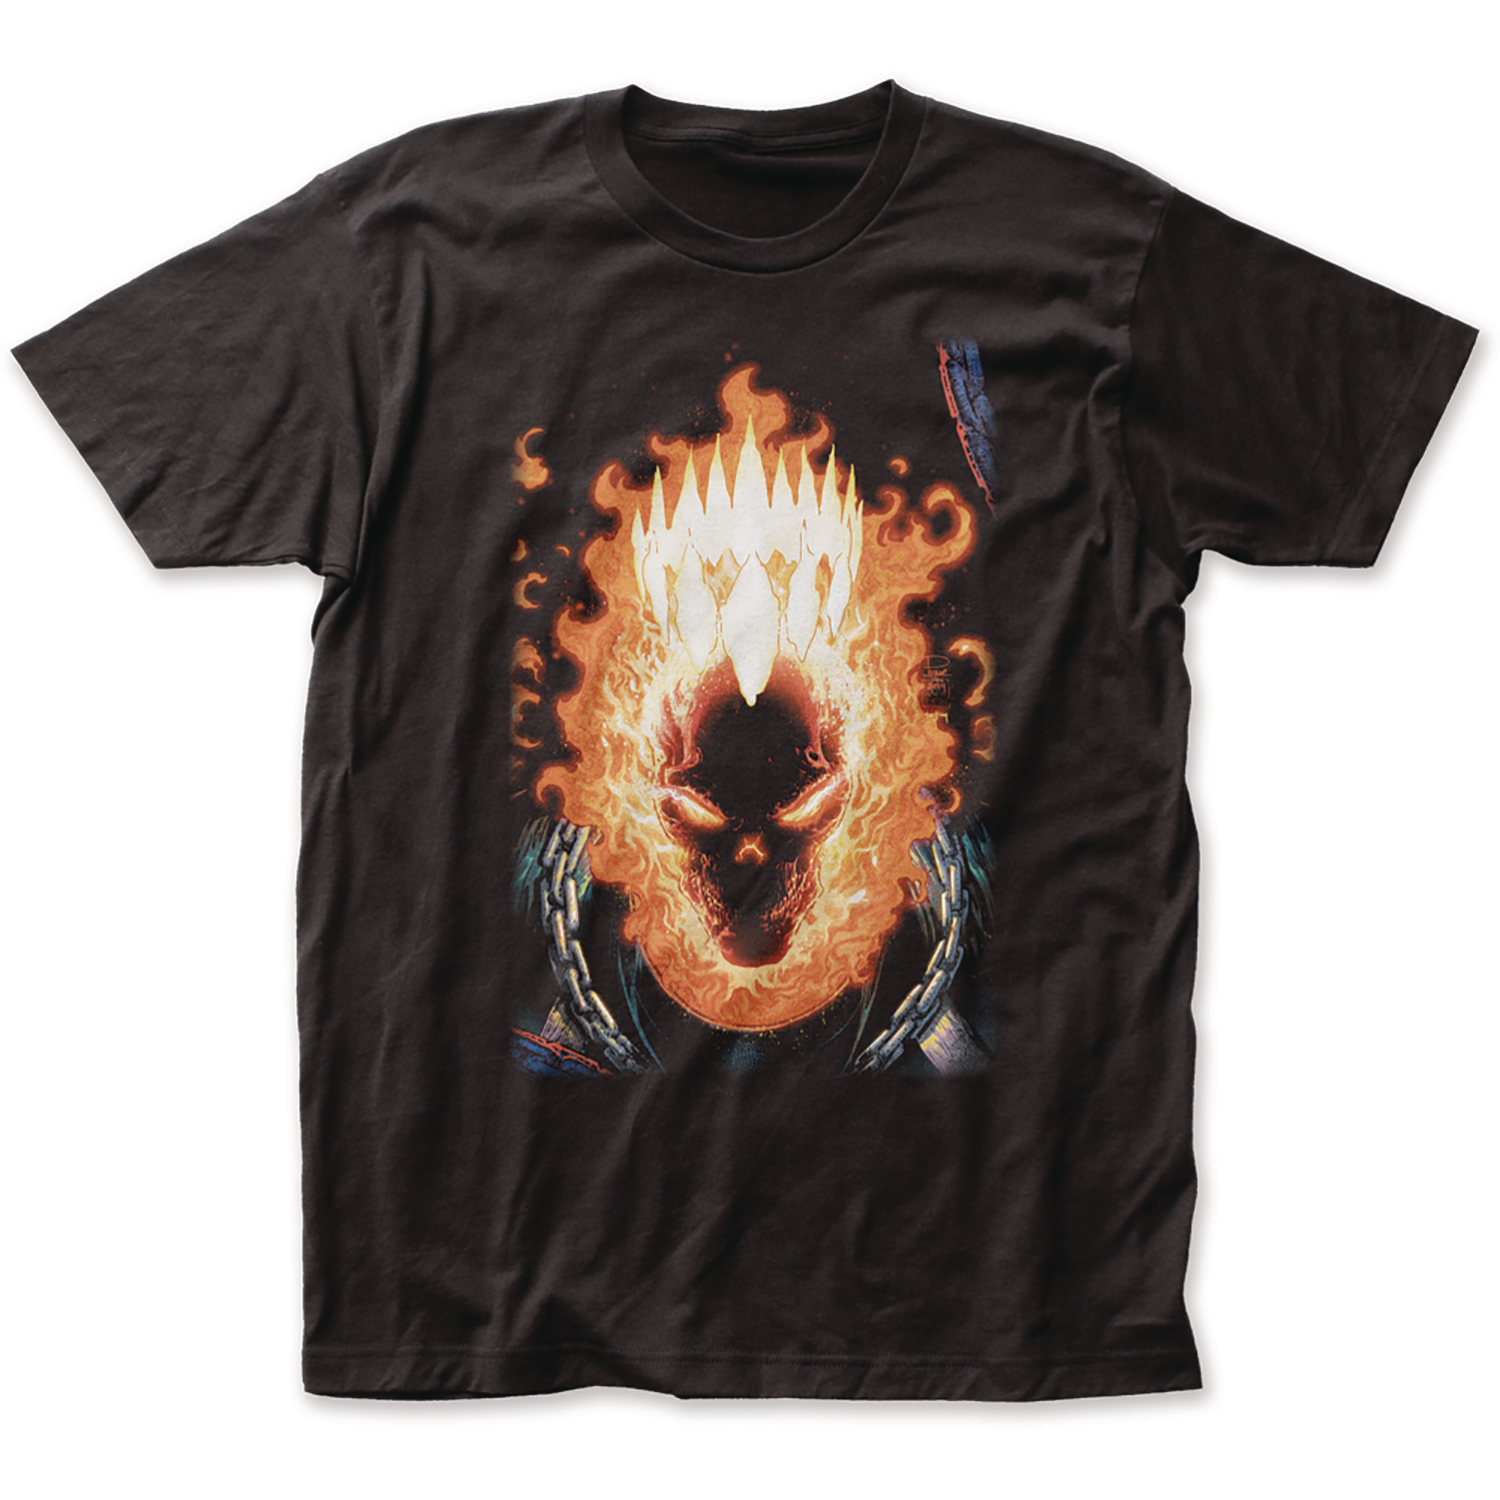 Marvel Ghost Rider Crown Px T-Shirt XL